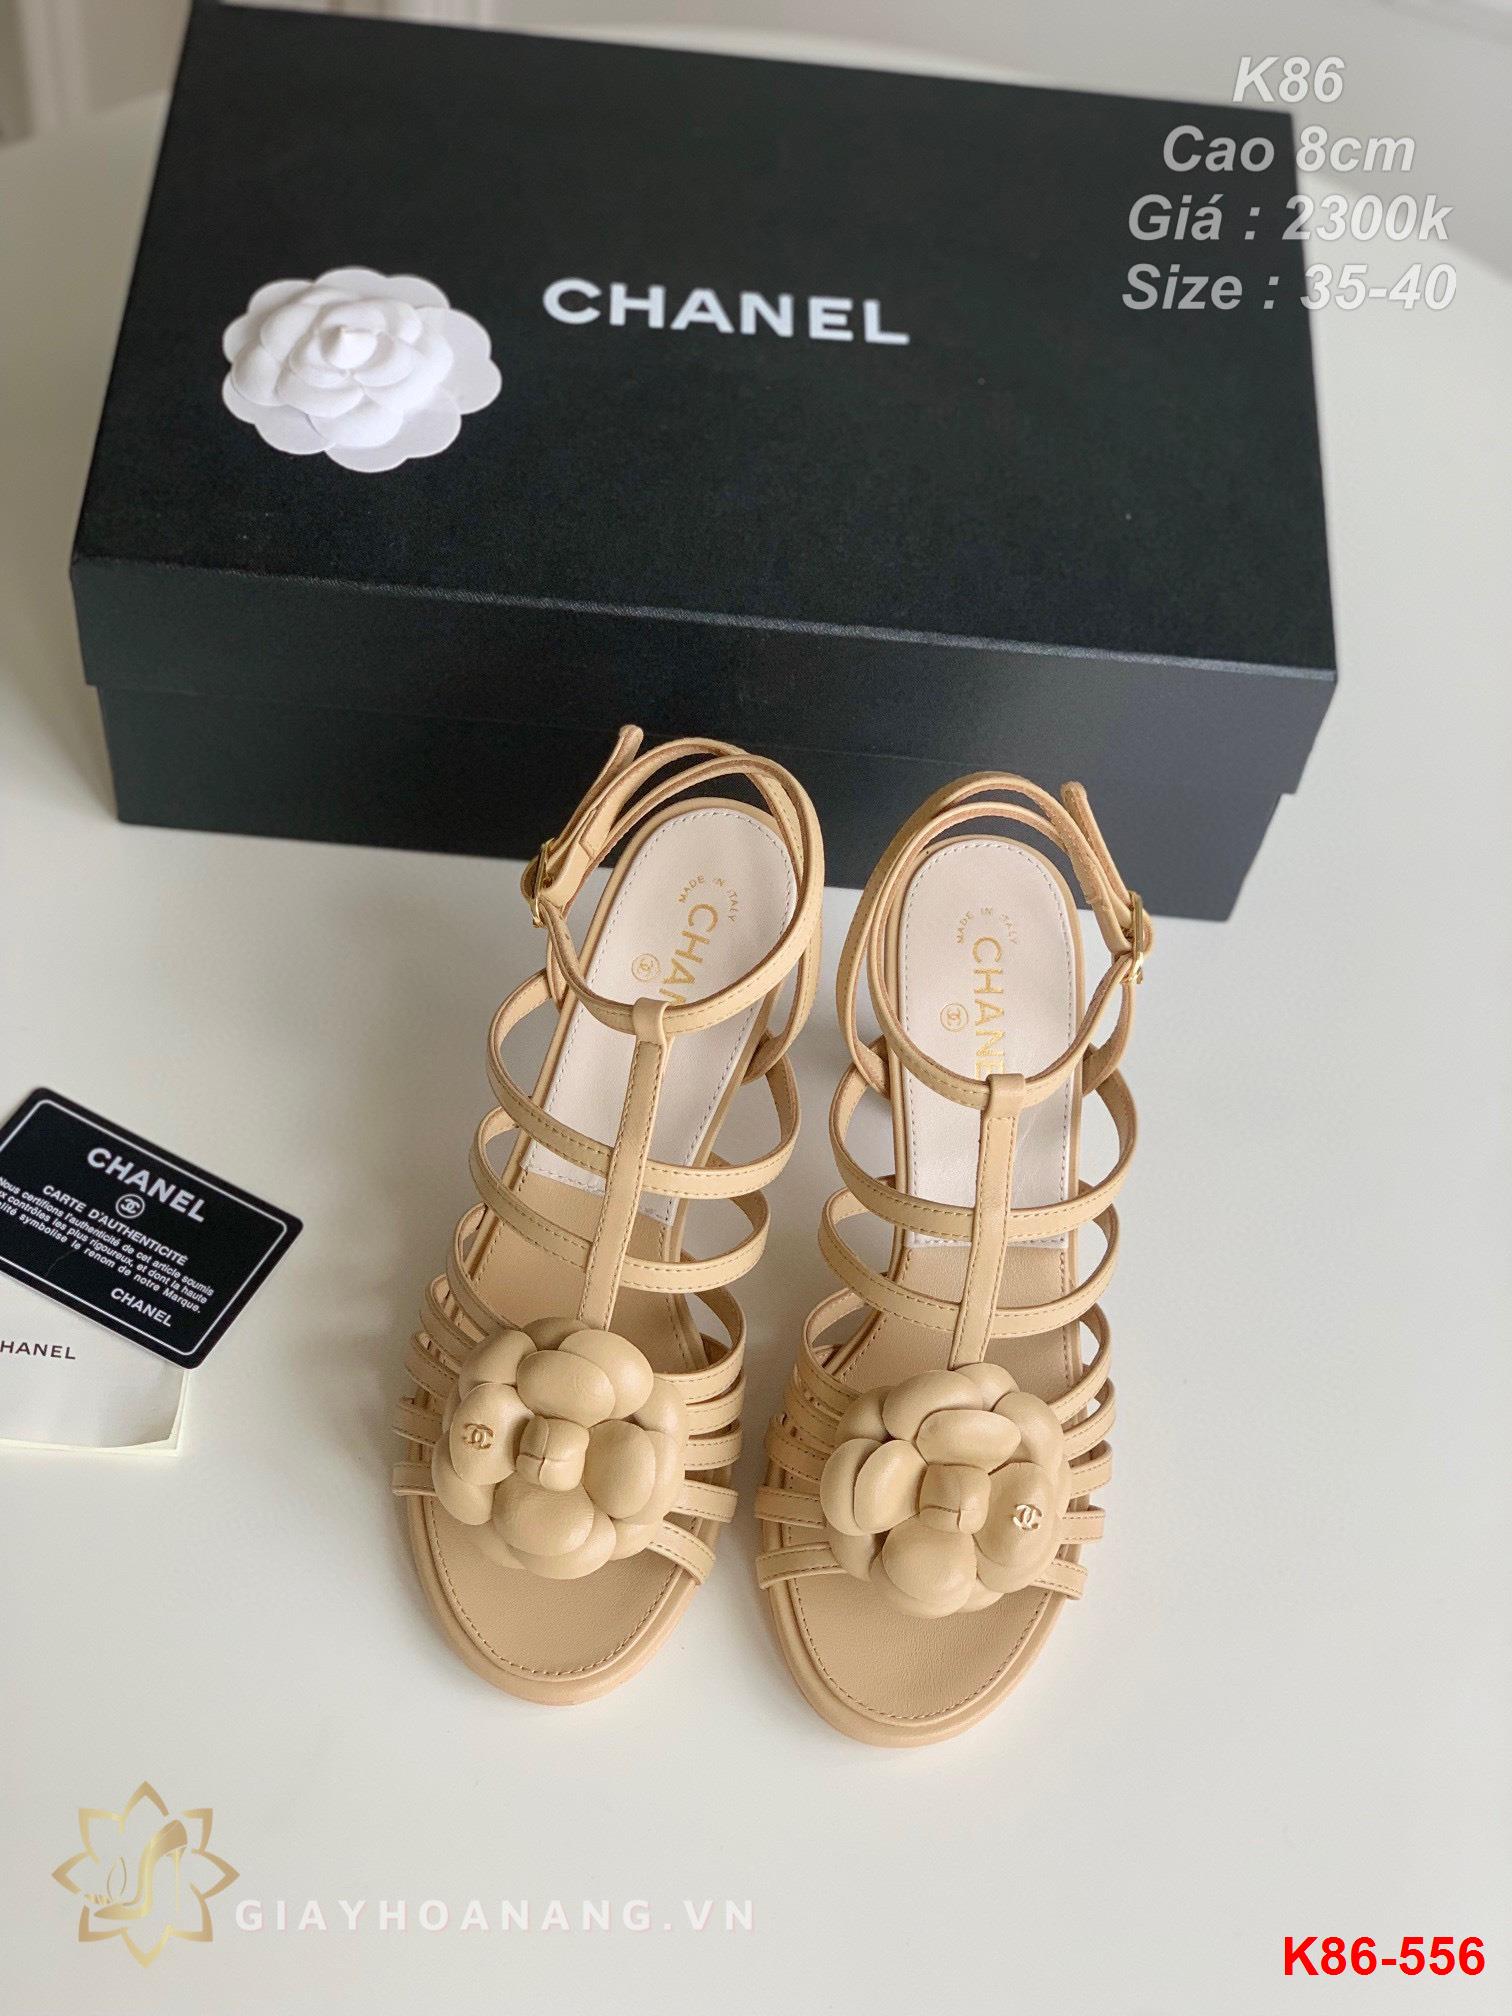 K86-556 Chanel sandal cao 8cm siêu cấp